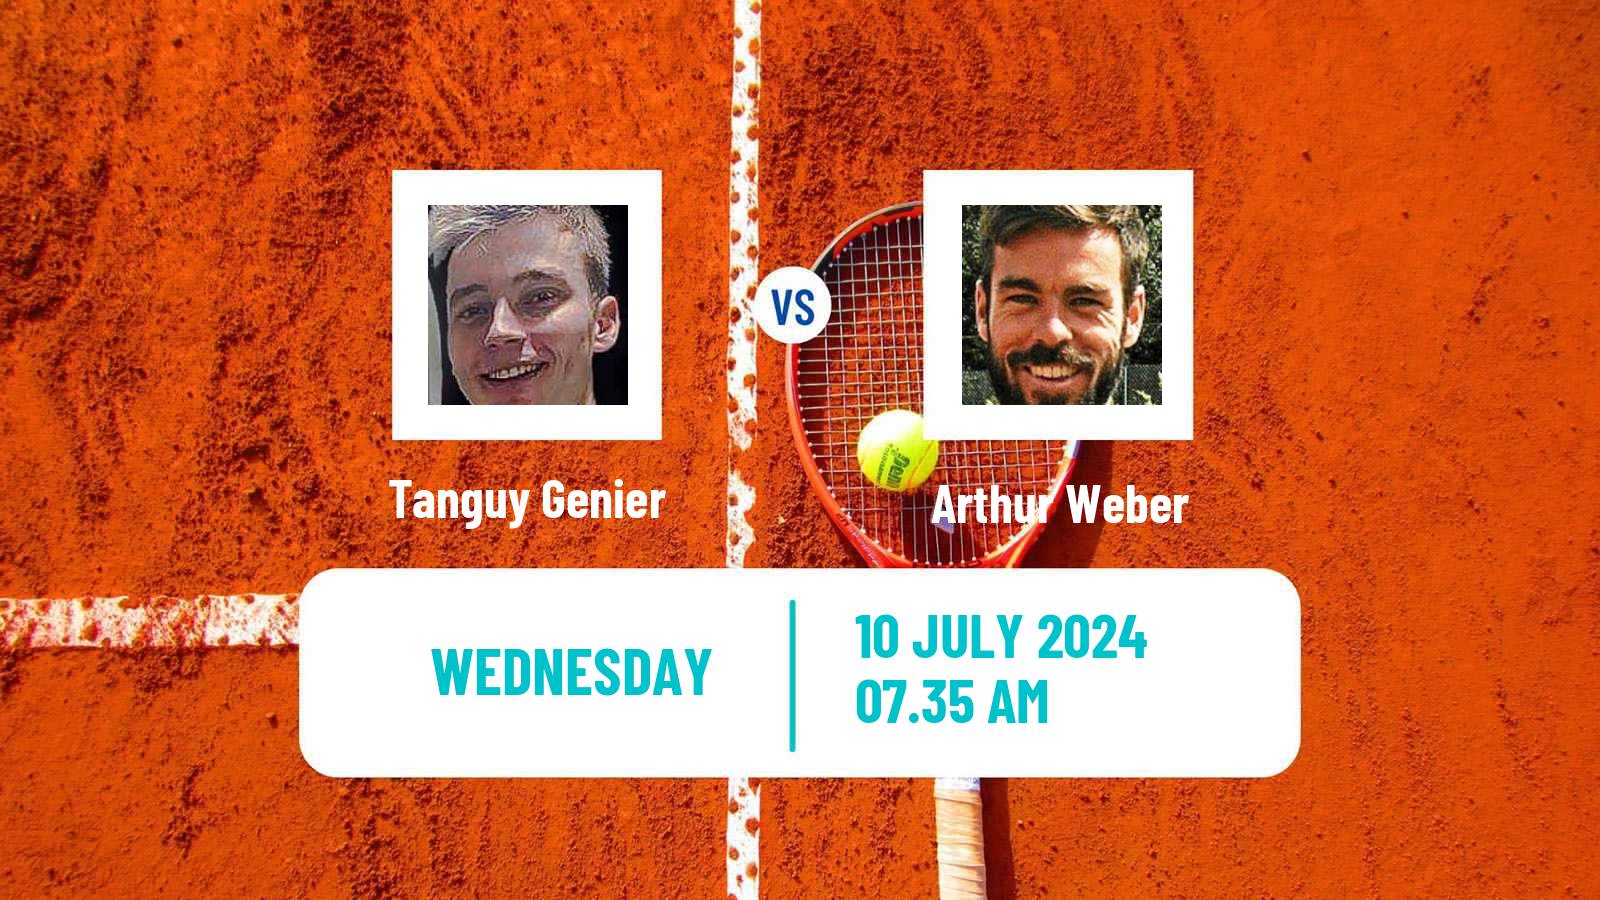 Tennis ITF M25 Kassel Men Tanguy Genier - Arthur Weber